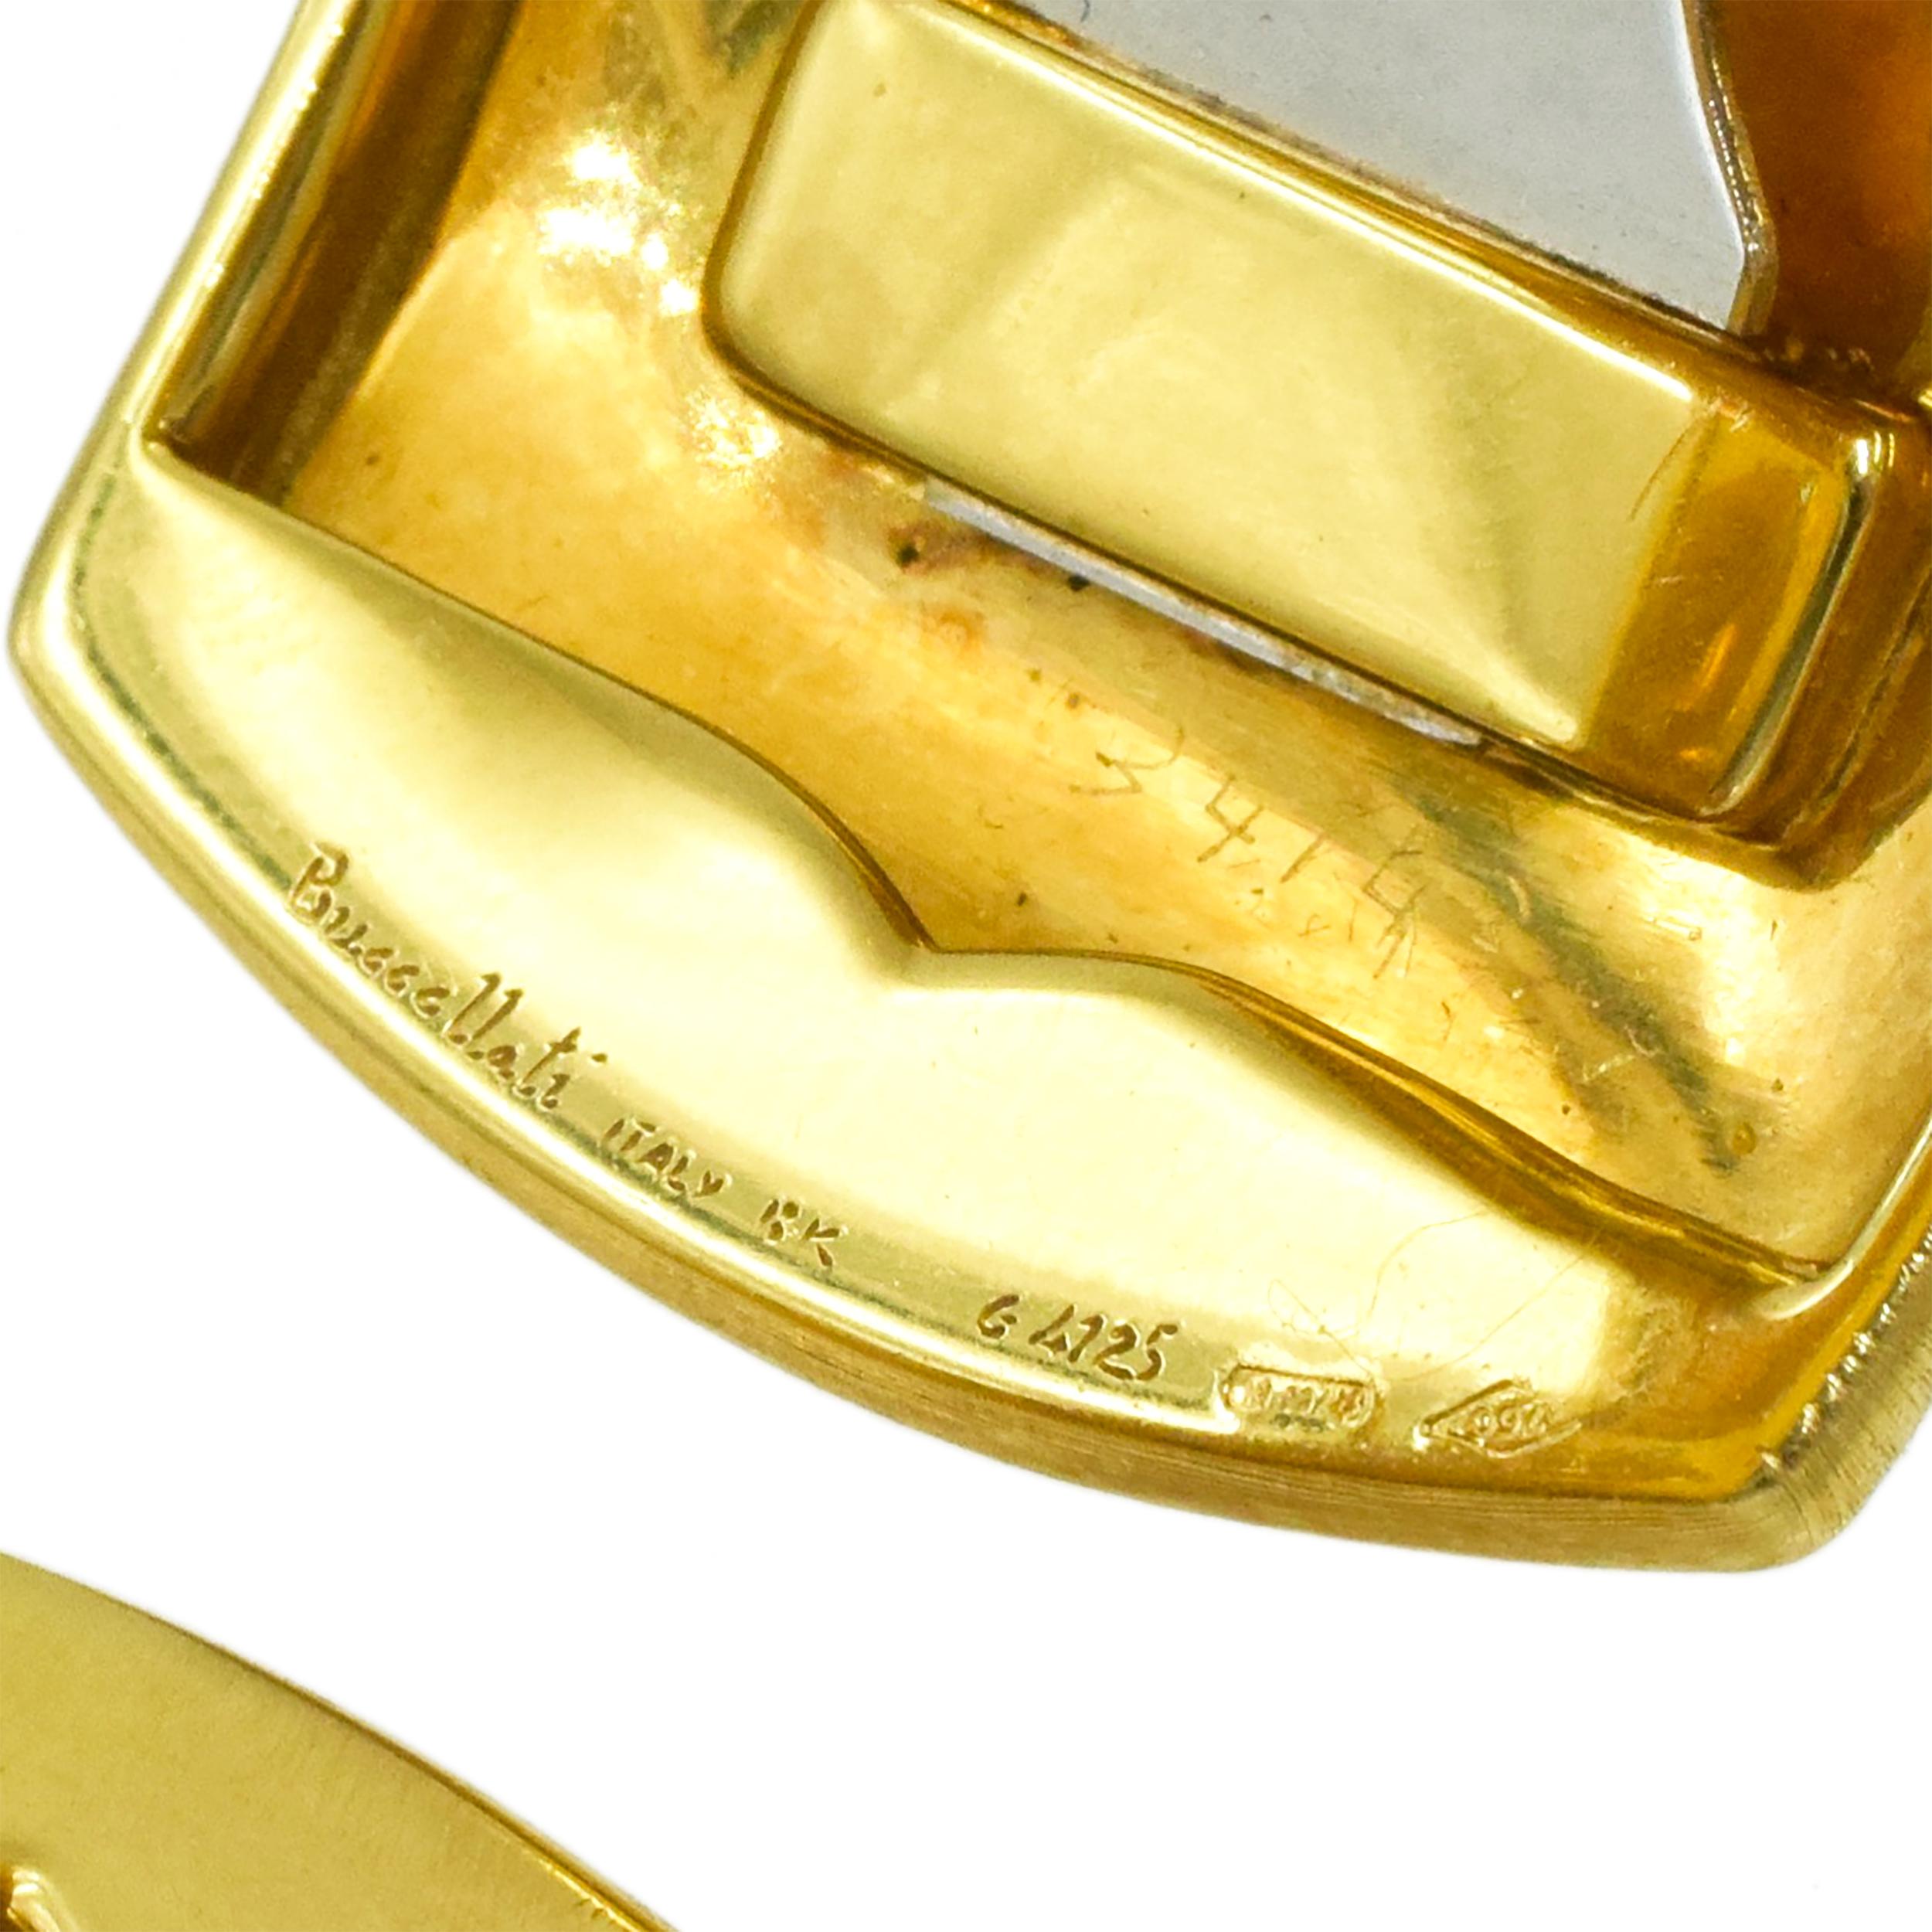 Buccellati 'Macri' Gold Bracelet and Ear Clip Suite For Sale 2